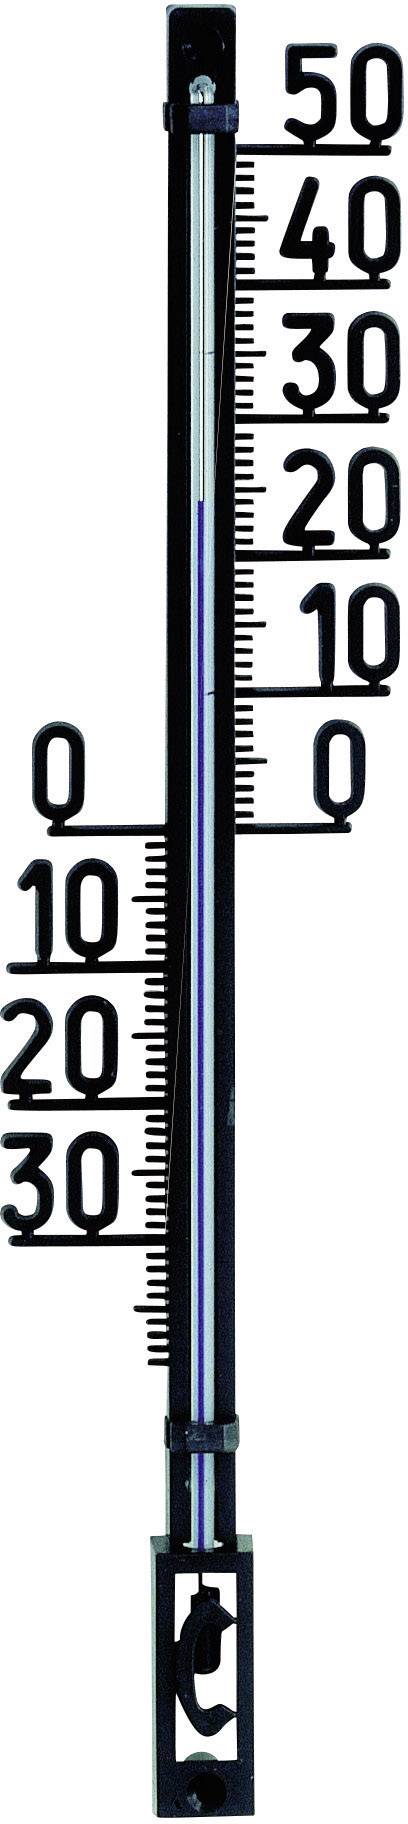 TFA-DOSTMANN Wand Thermometer TFA 12.6003.01.90 Schwarz